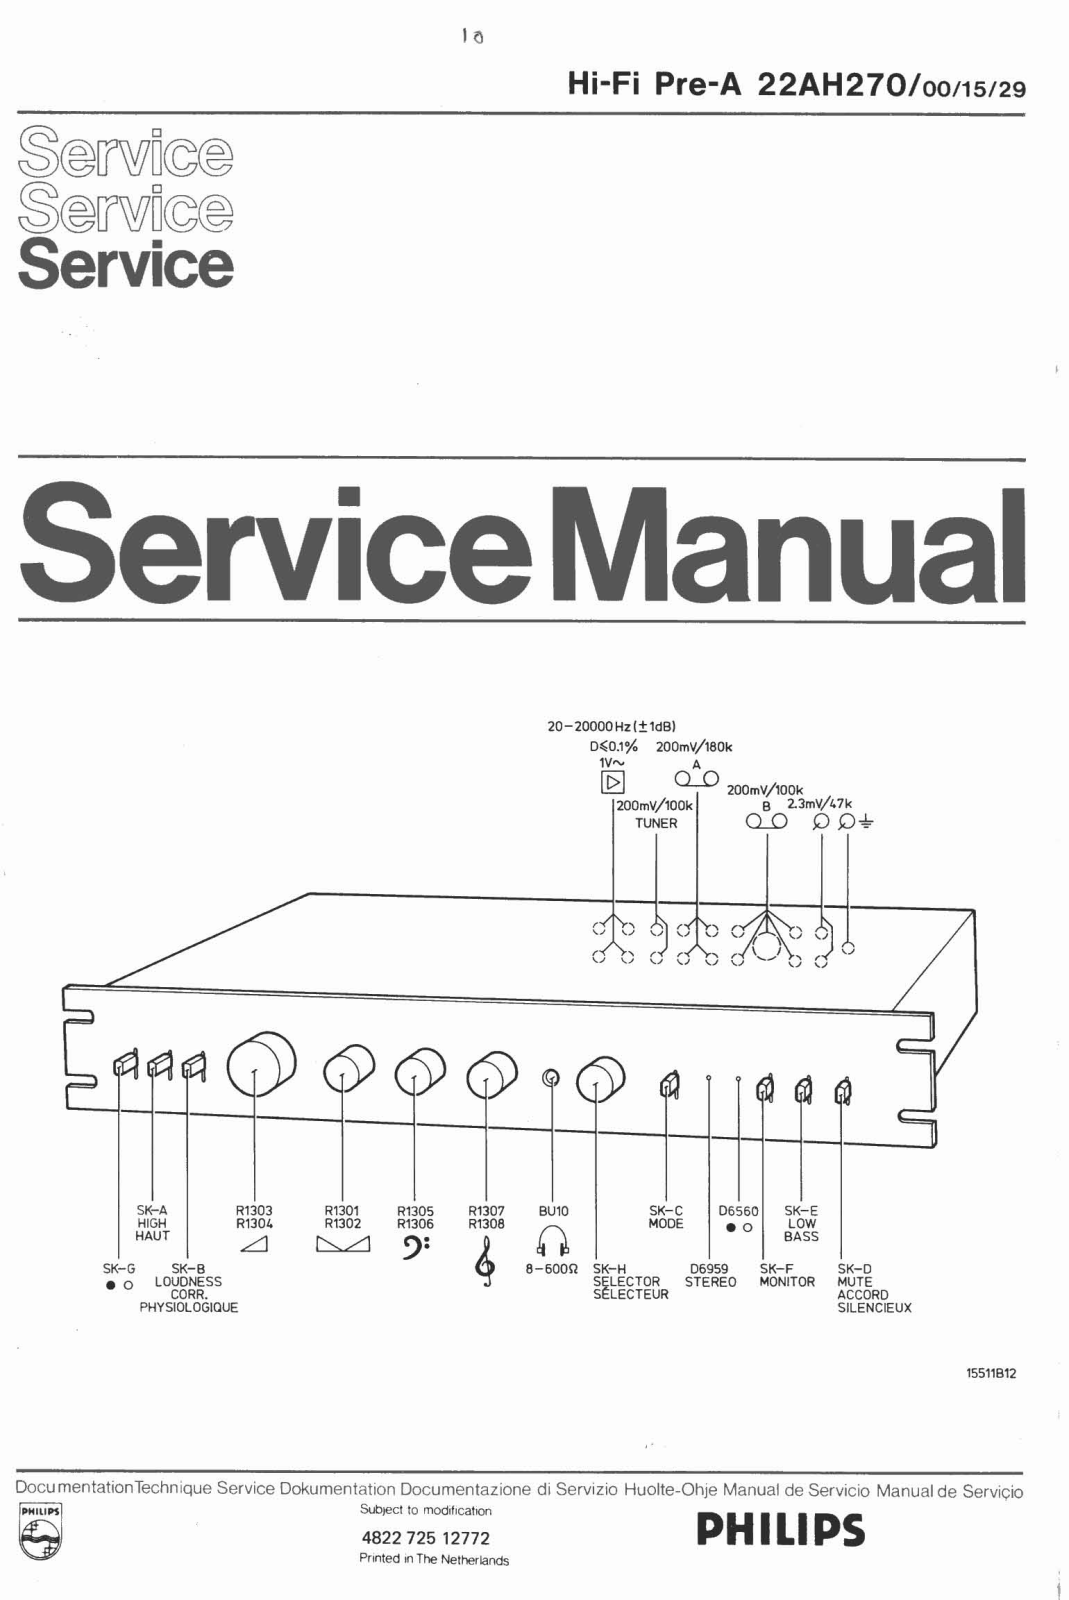 Philips 22-AH-270 Service Manual